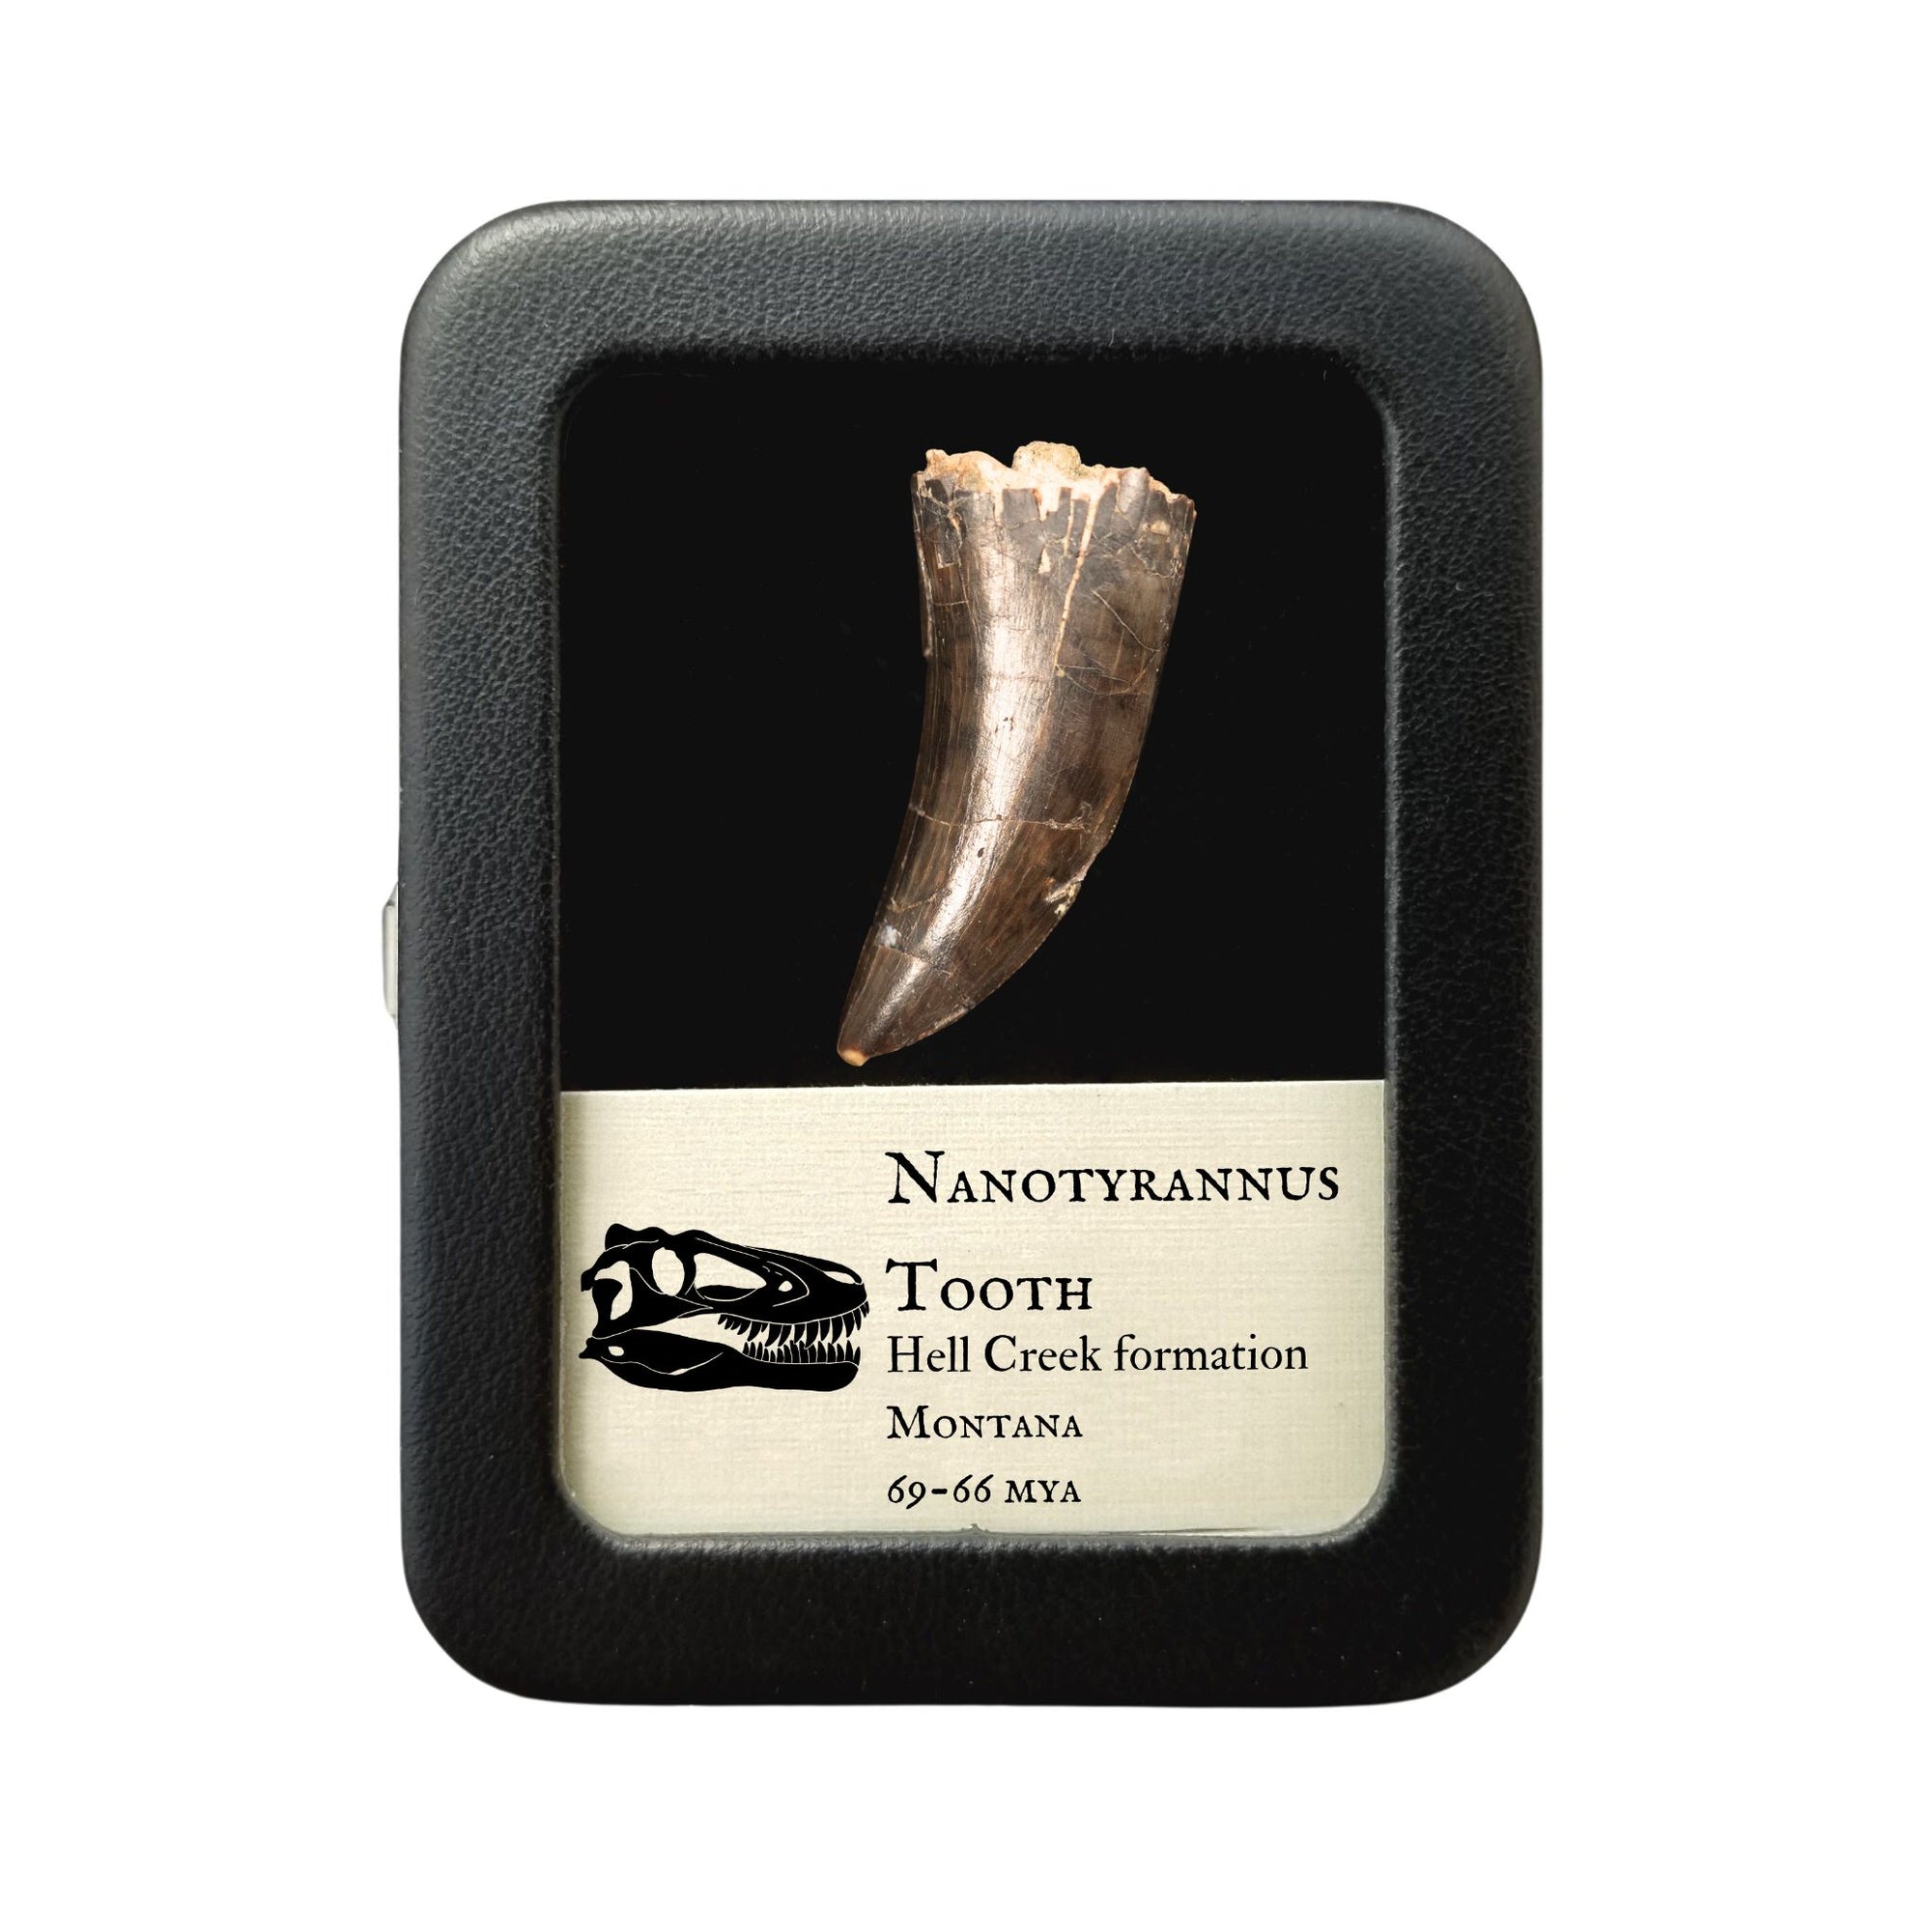 Nanotyrannus Tooth, 35 mm long - Cretaceous Period - 68 to 66 MYA - Montana, USA